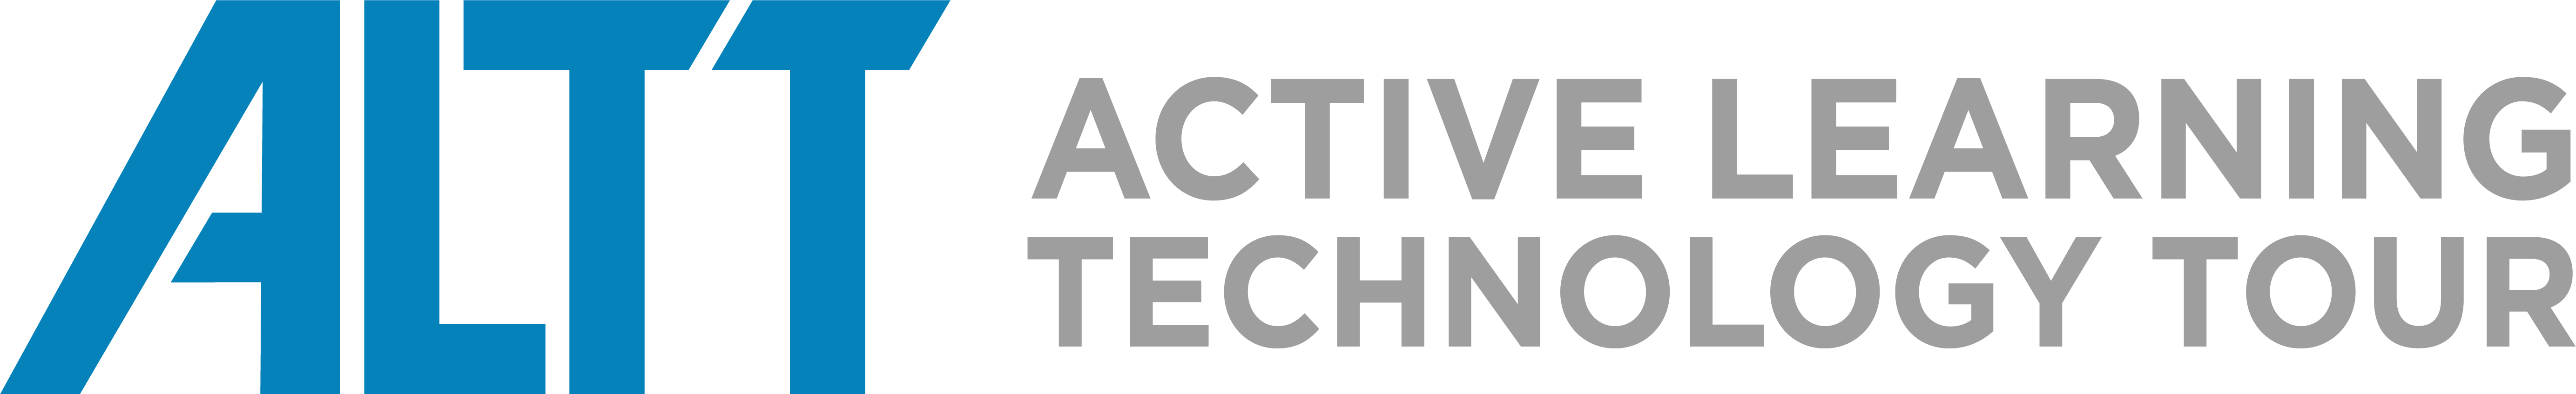 T1V-Active-Learning-Technology-Tour-Logo-Horizontal